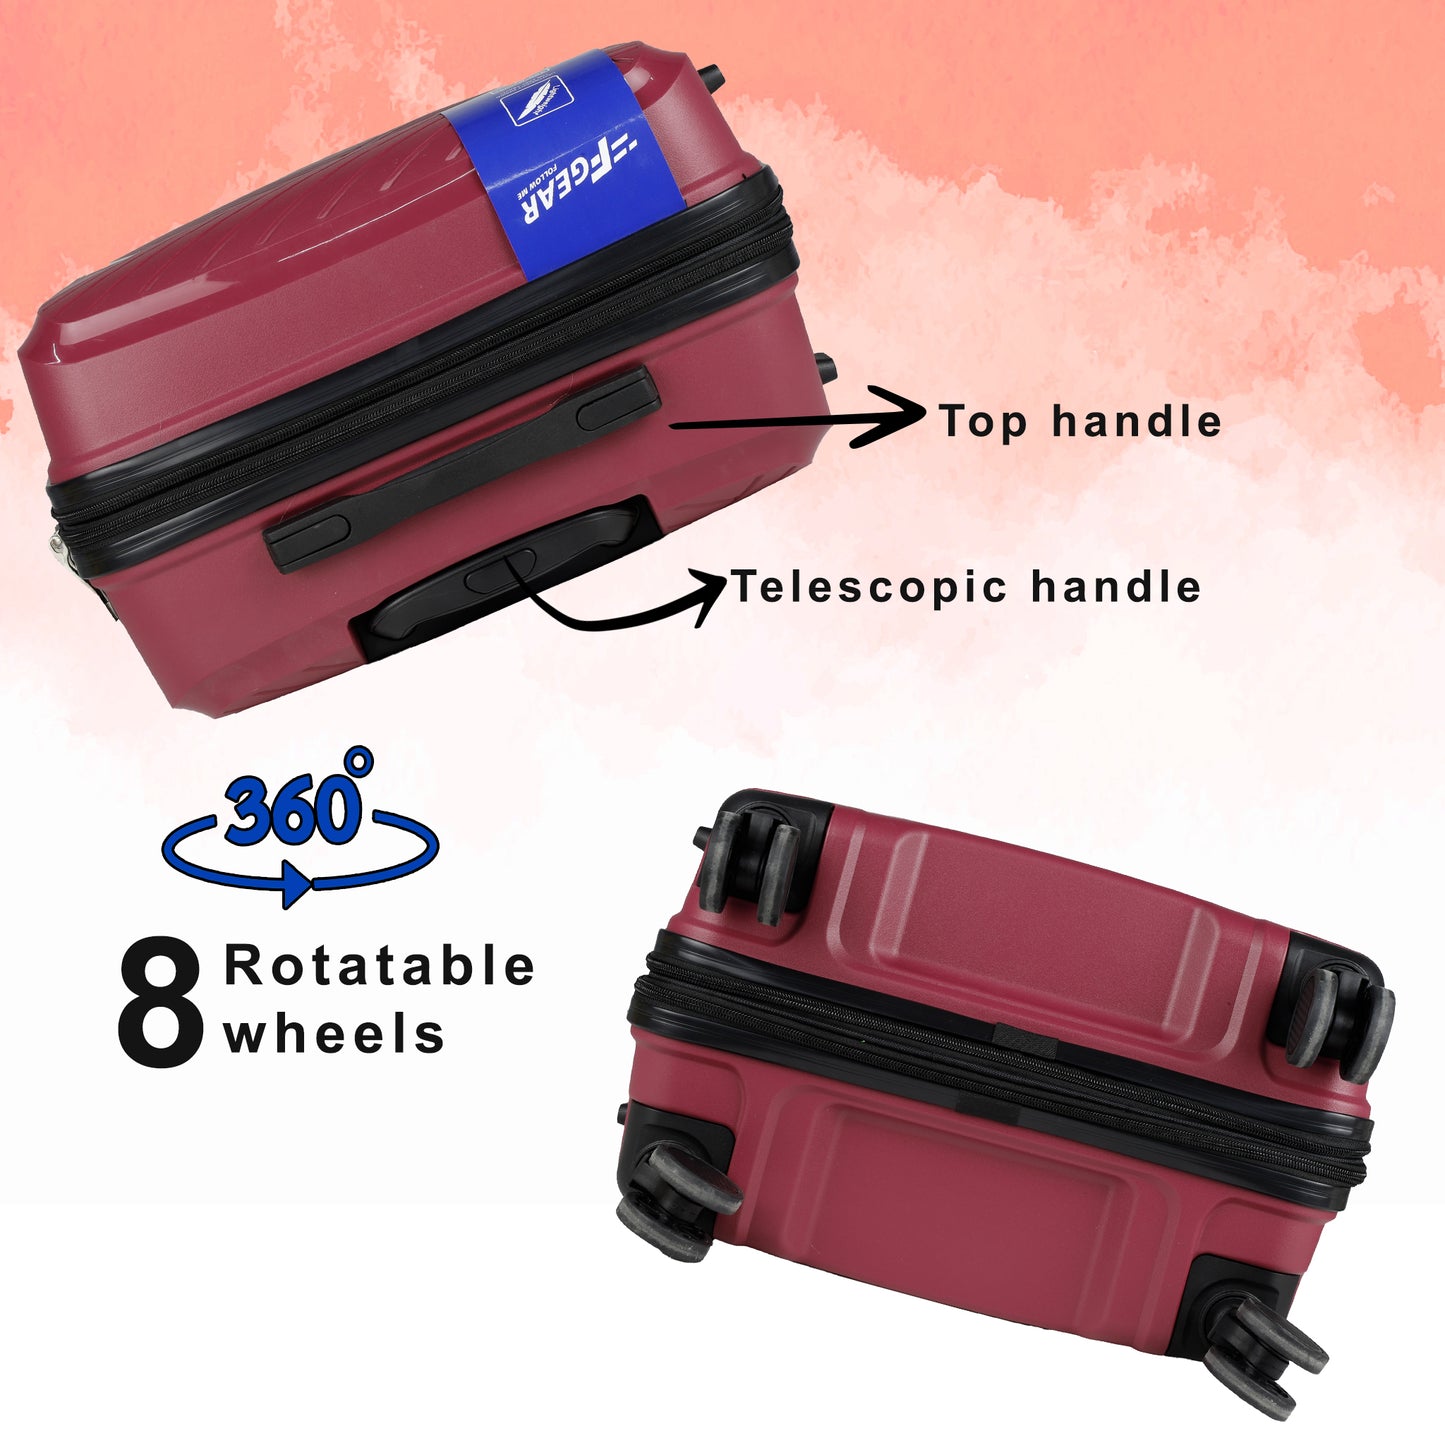 STV PP03 24" Rosebud Expandable Medium Check-in Suitcase